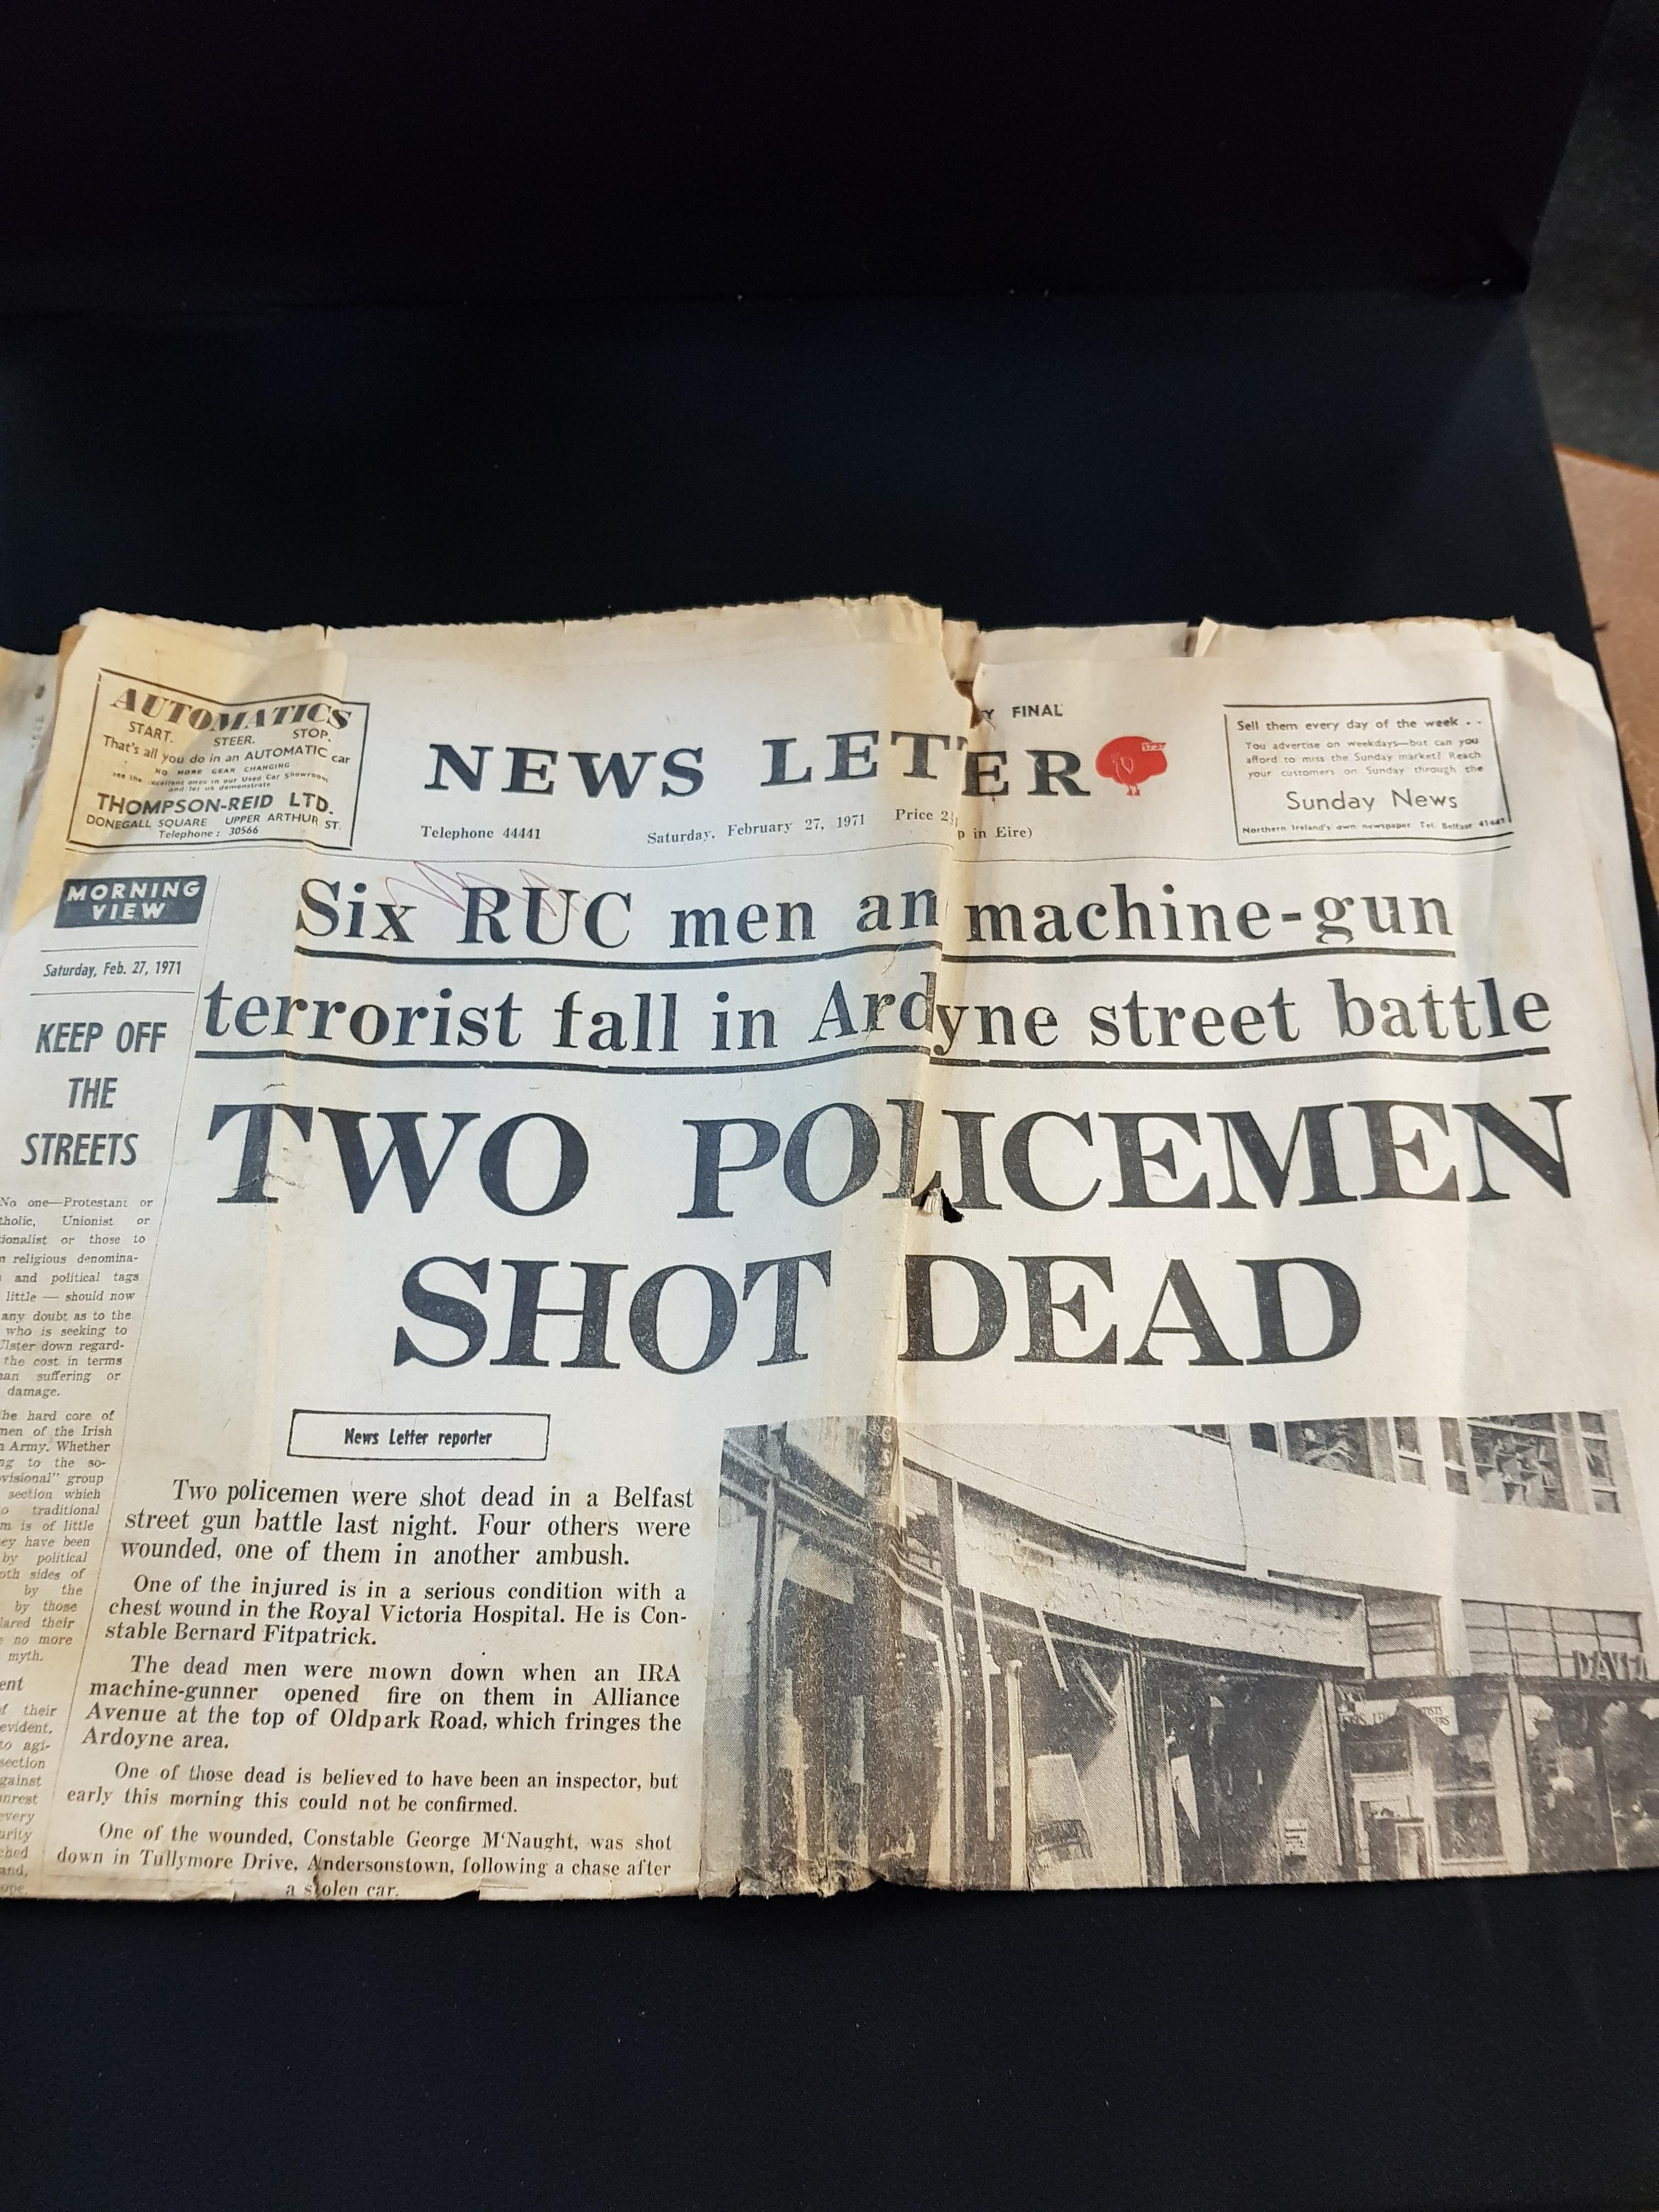 OLD NEWSPAPER - HEADLINE - TWO POLICEMEN SHOT DEAD